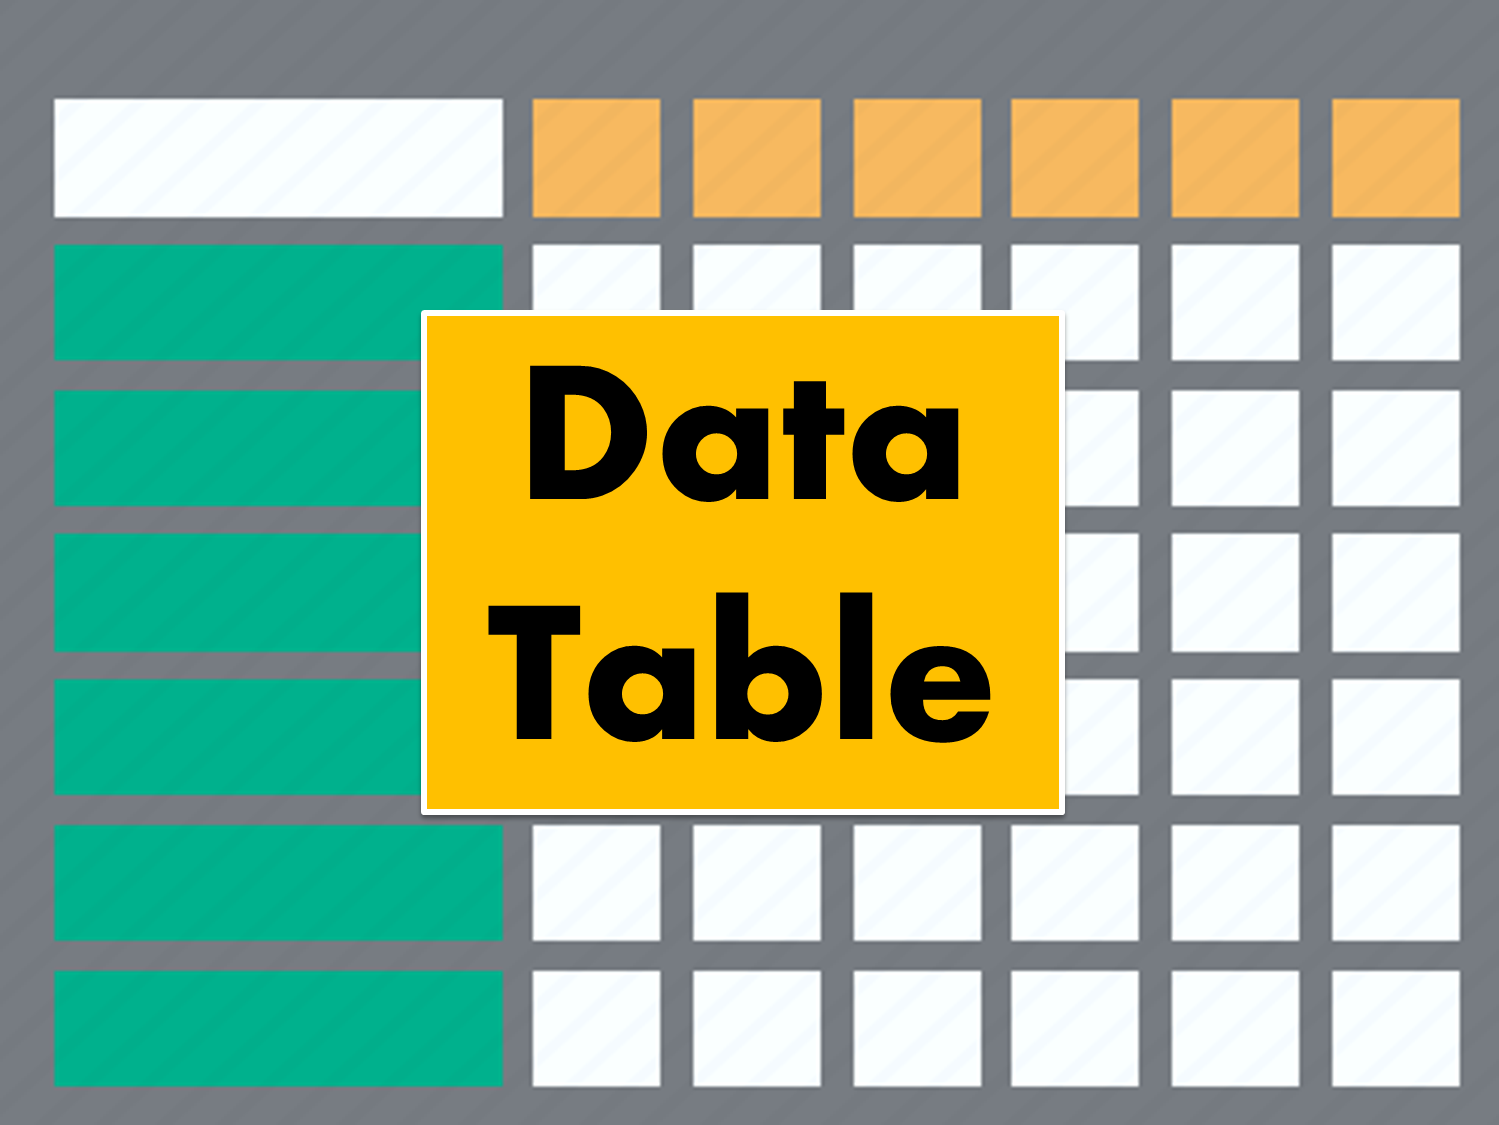 Data Table - Data Interpretation